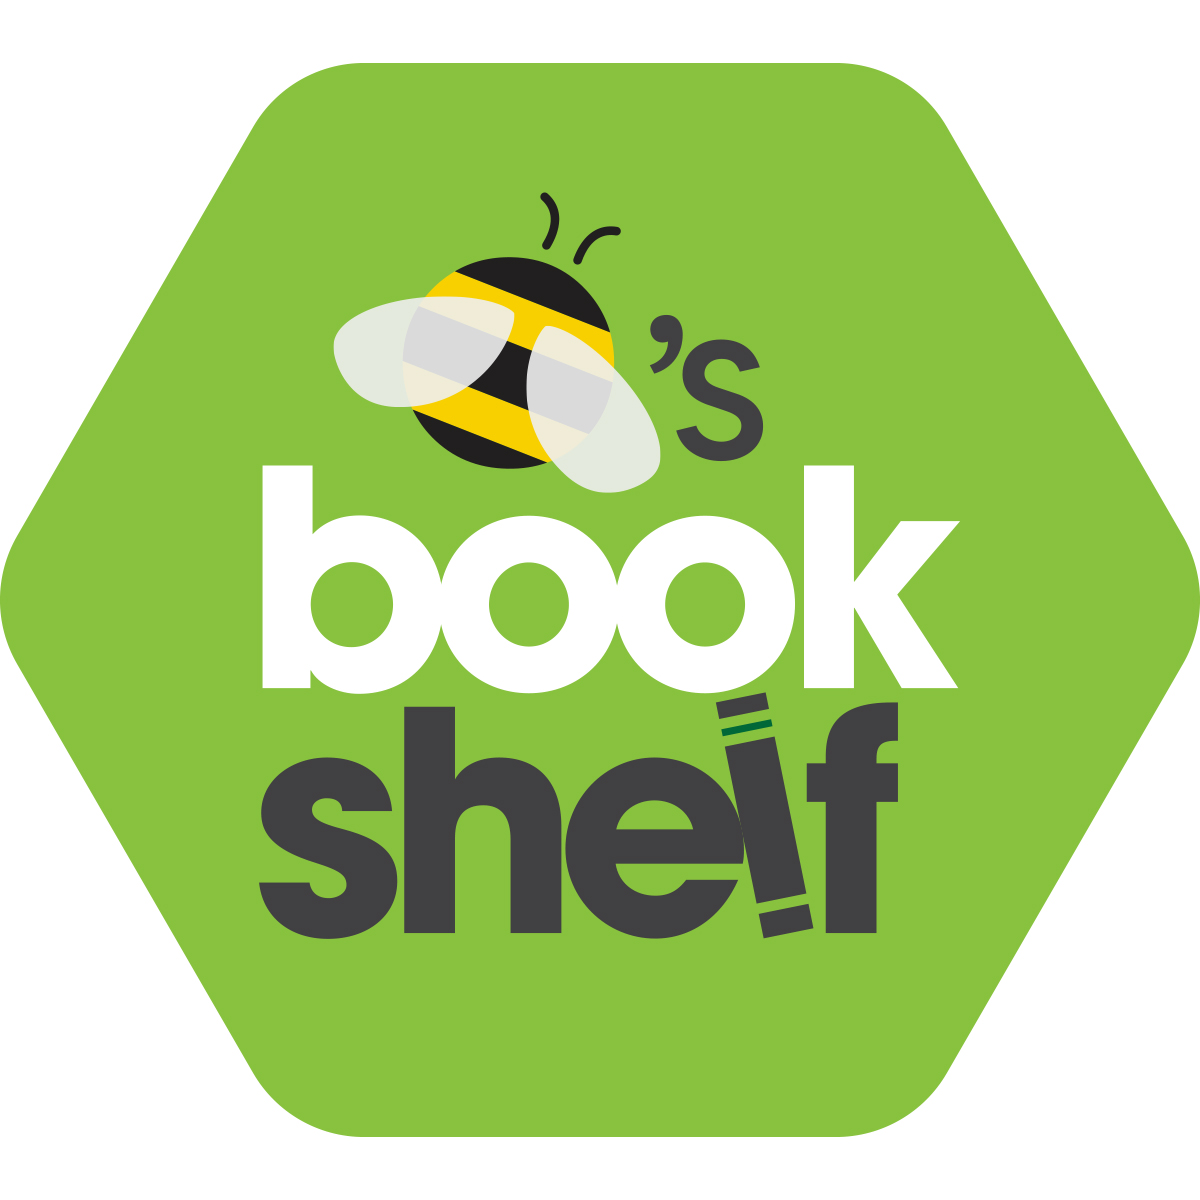 Bee's Bookshelf logo